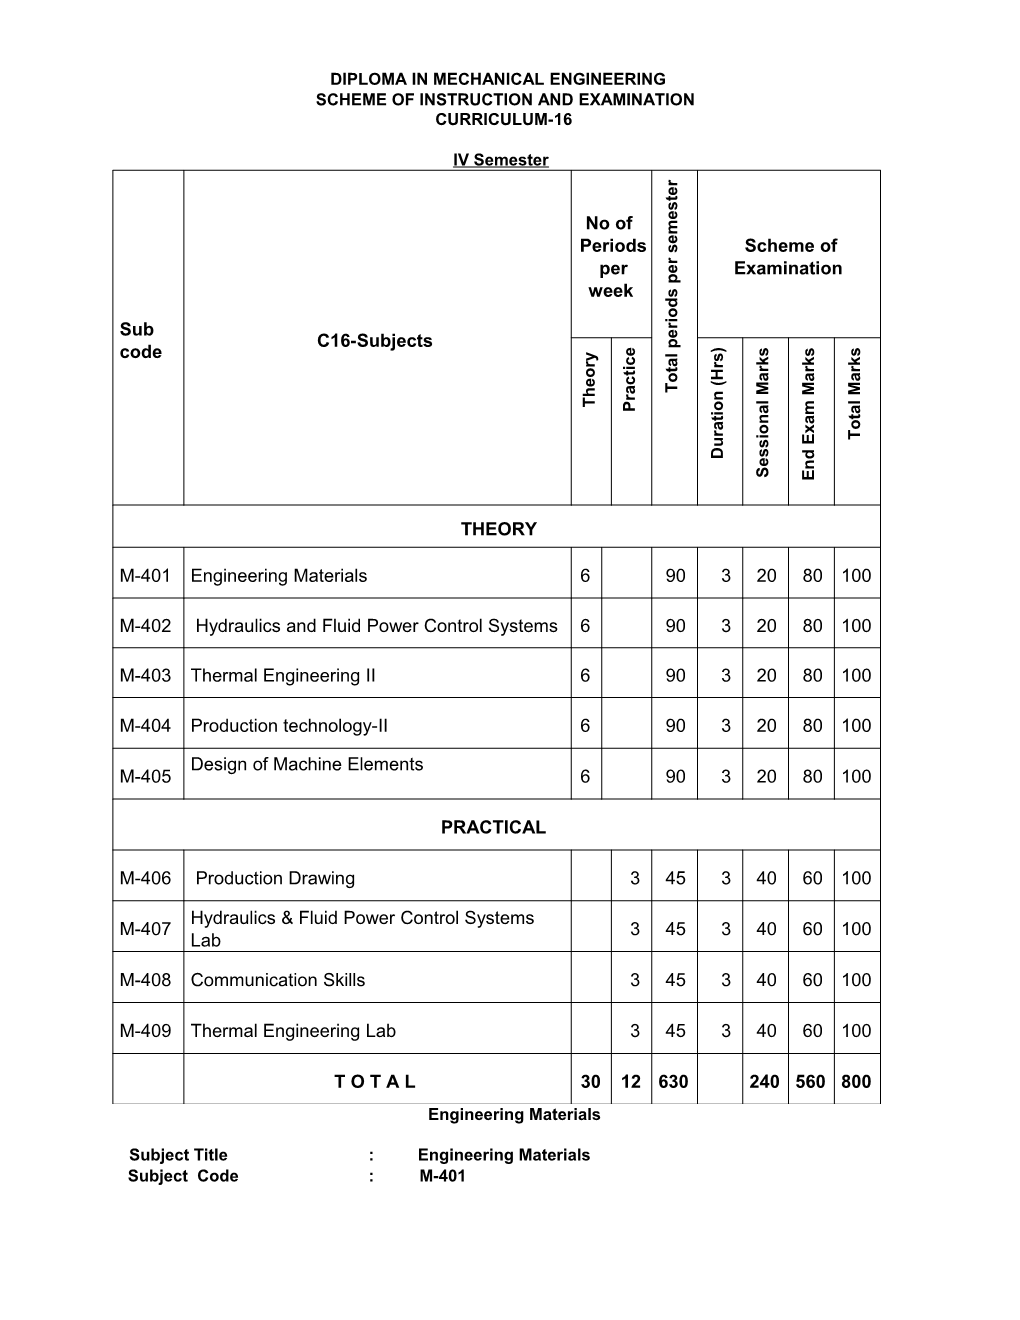 Scheme of Instruction and Examination Curriculum-16